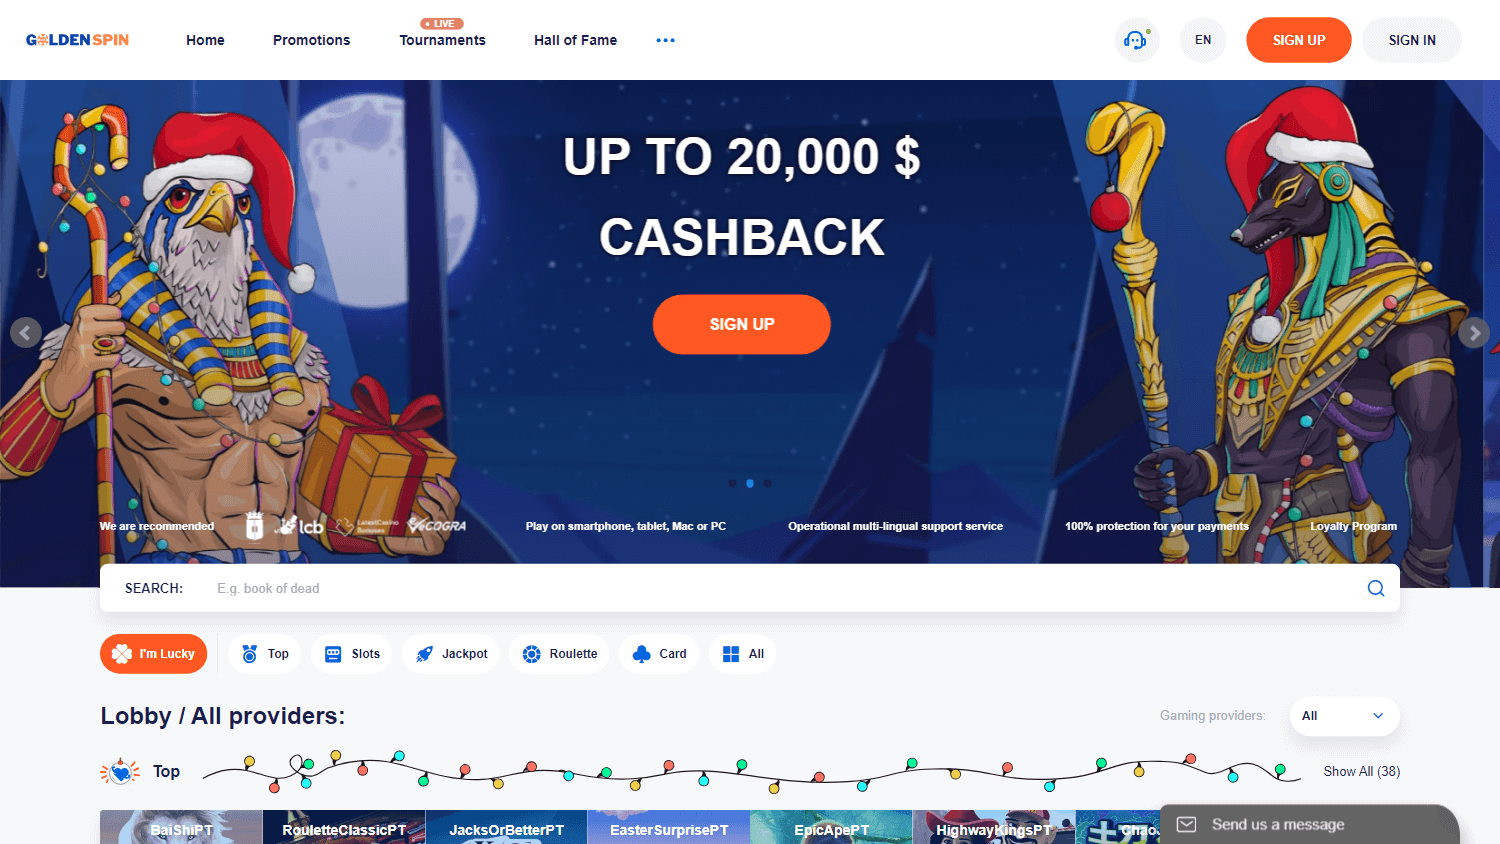 goldenspin_casino_homepage_desktop